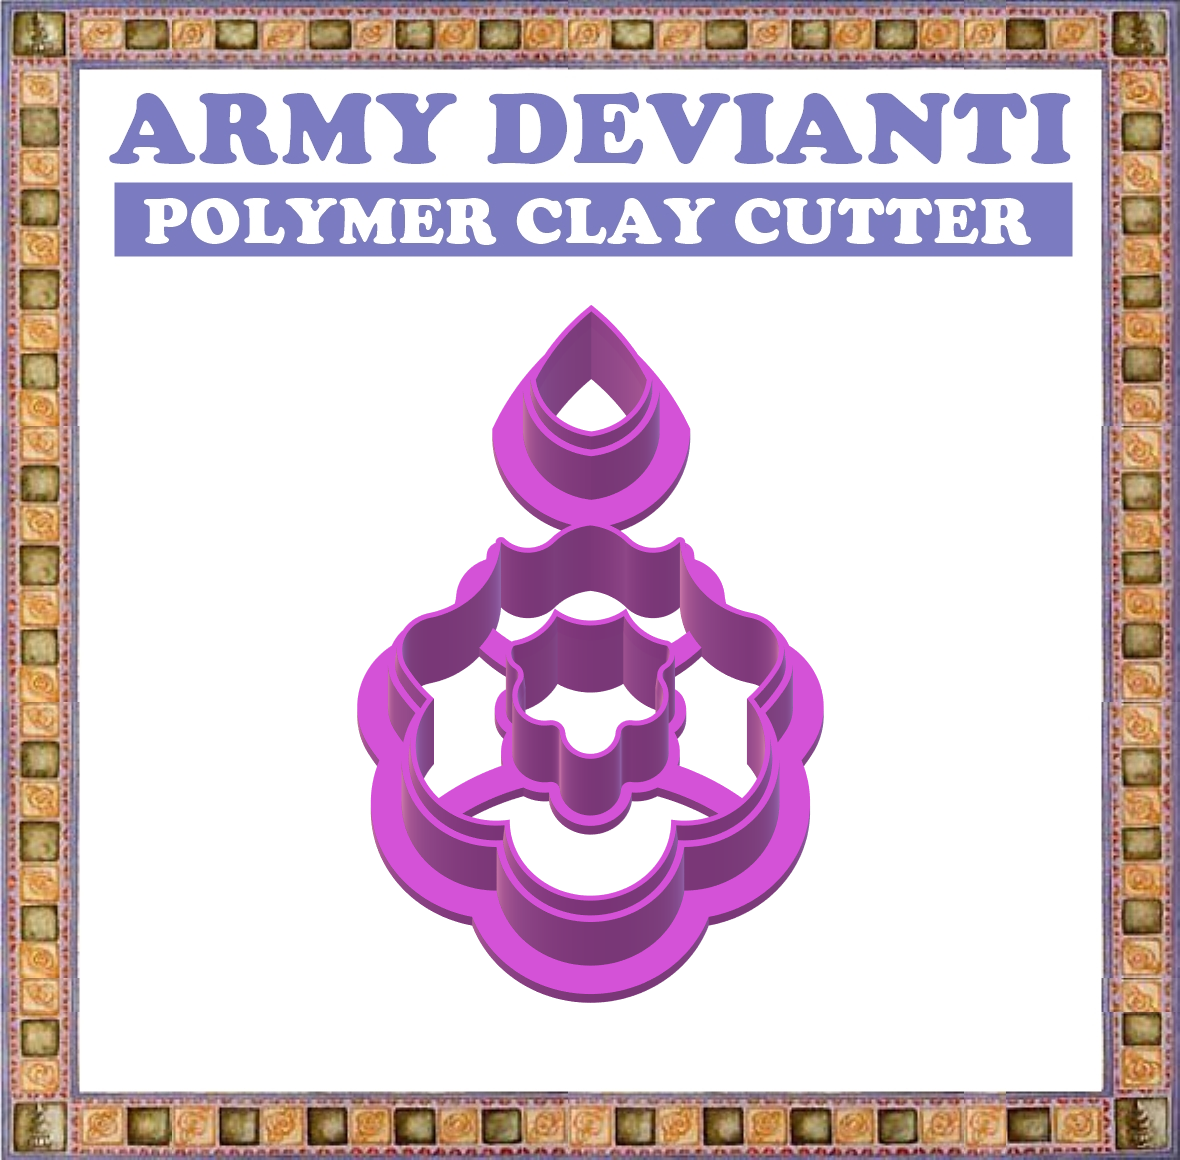 od jis Ae a a iar a ee <i STL file POLYMER CLAY CUTTER 5 SIZE .CC. ARMY DEVIANTI・3D printable design to download, armydevianti